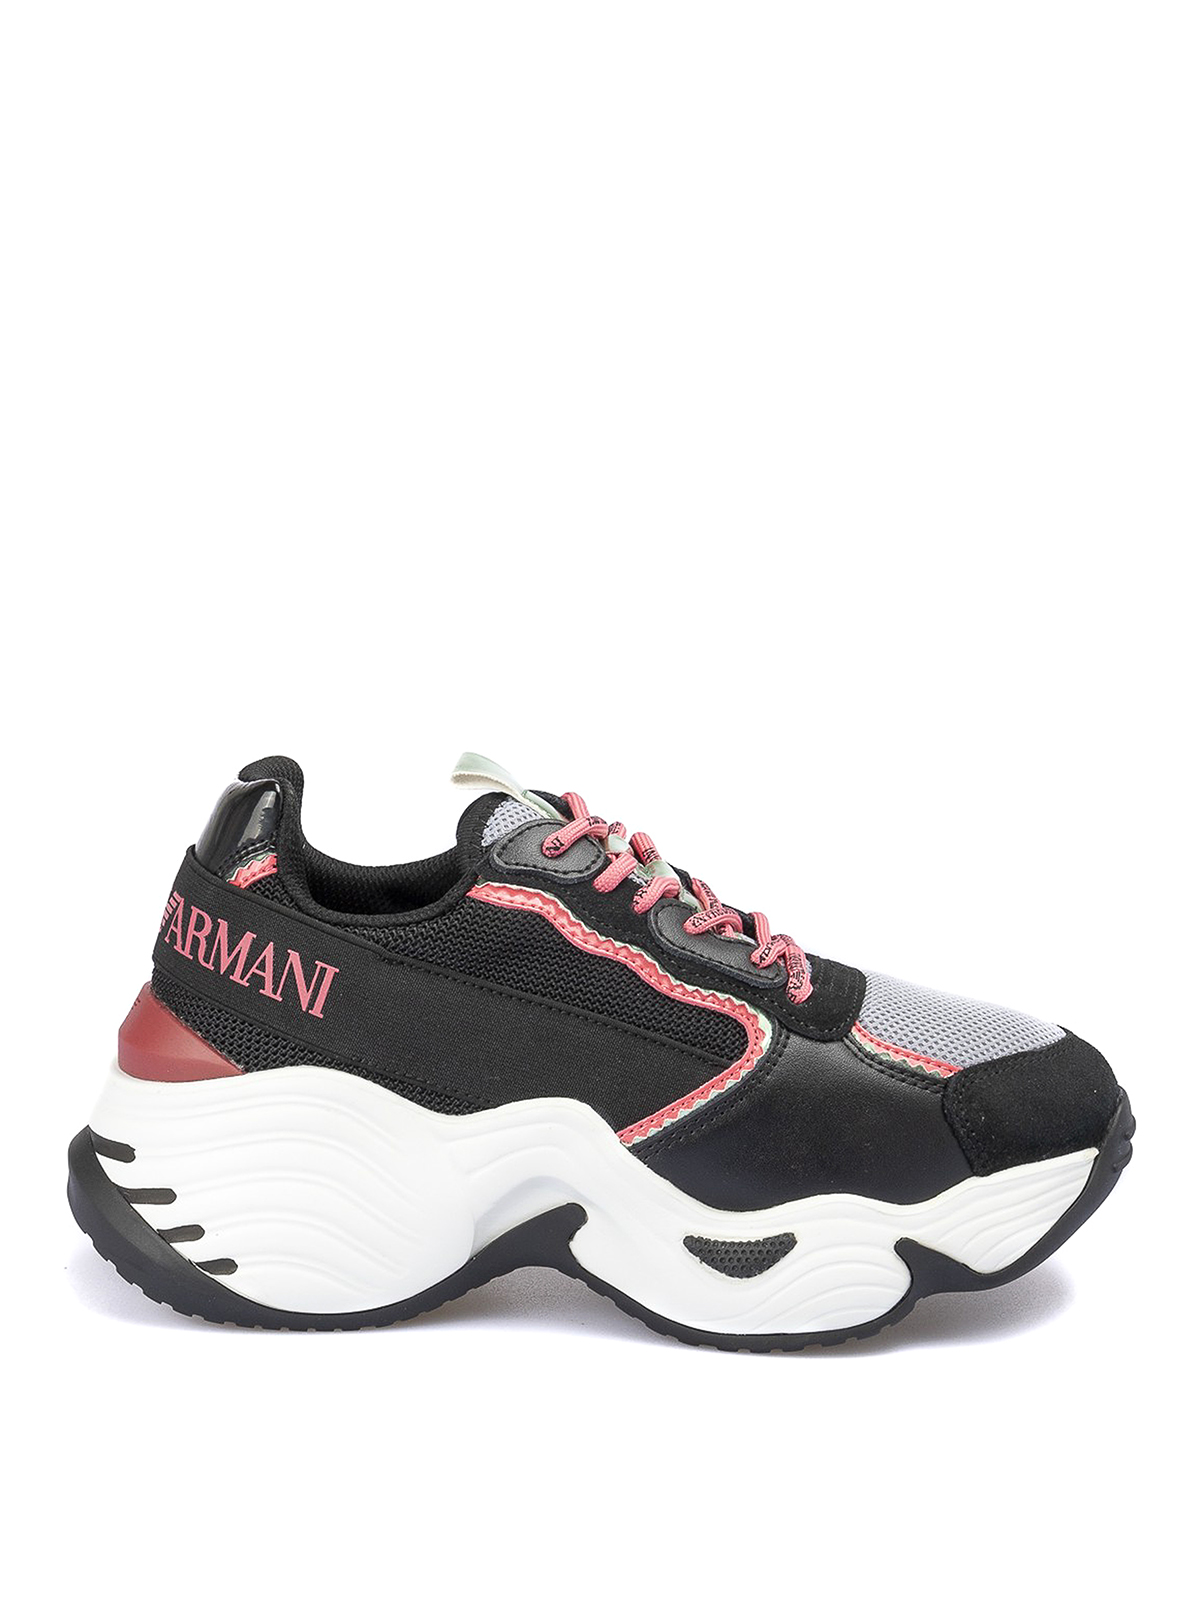 armani shoes black